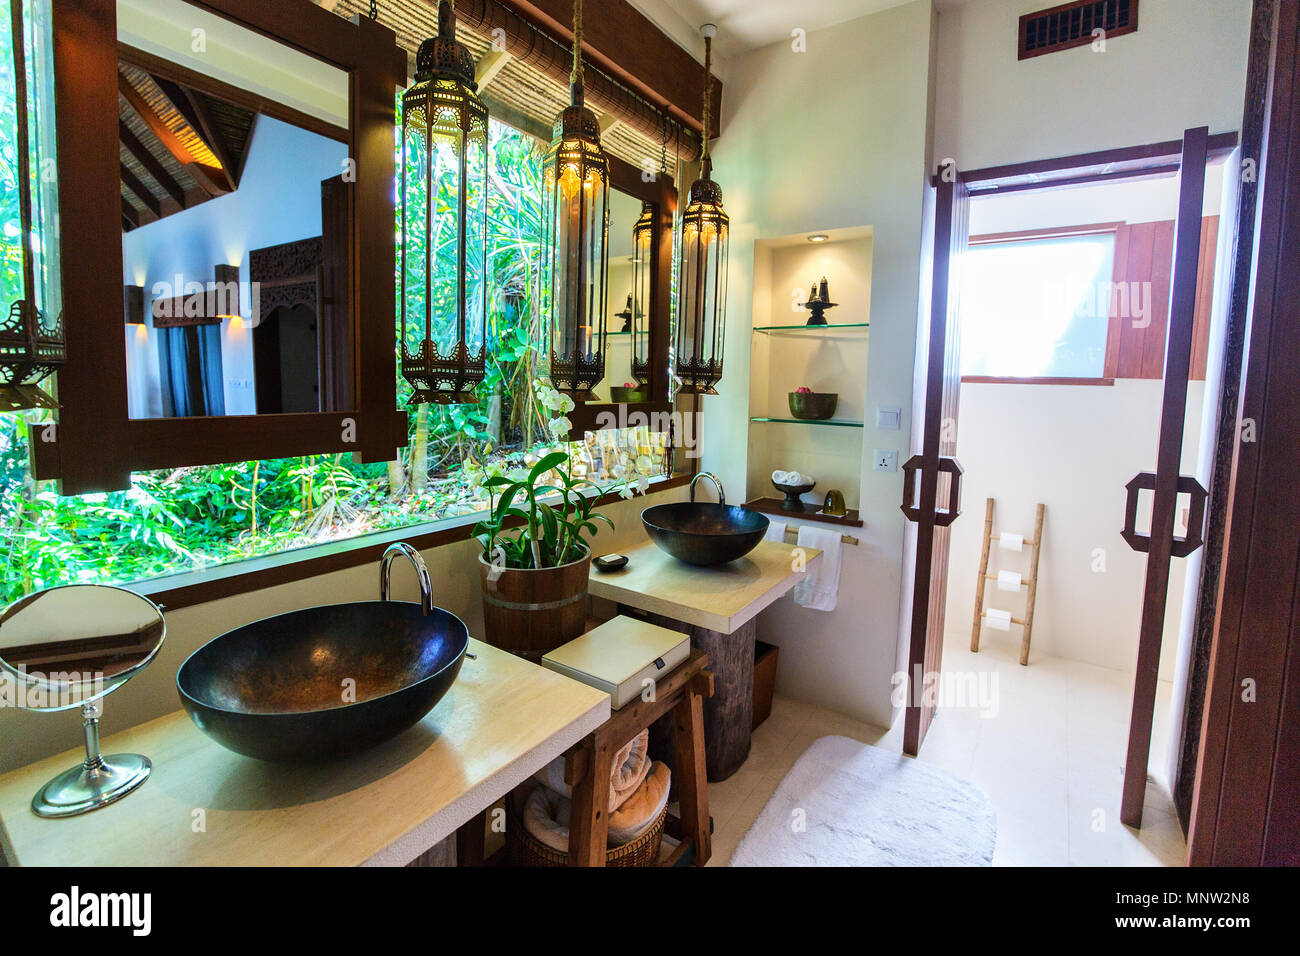 Tropical bathroom interior in a luxury resort Stock Photo